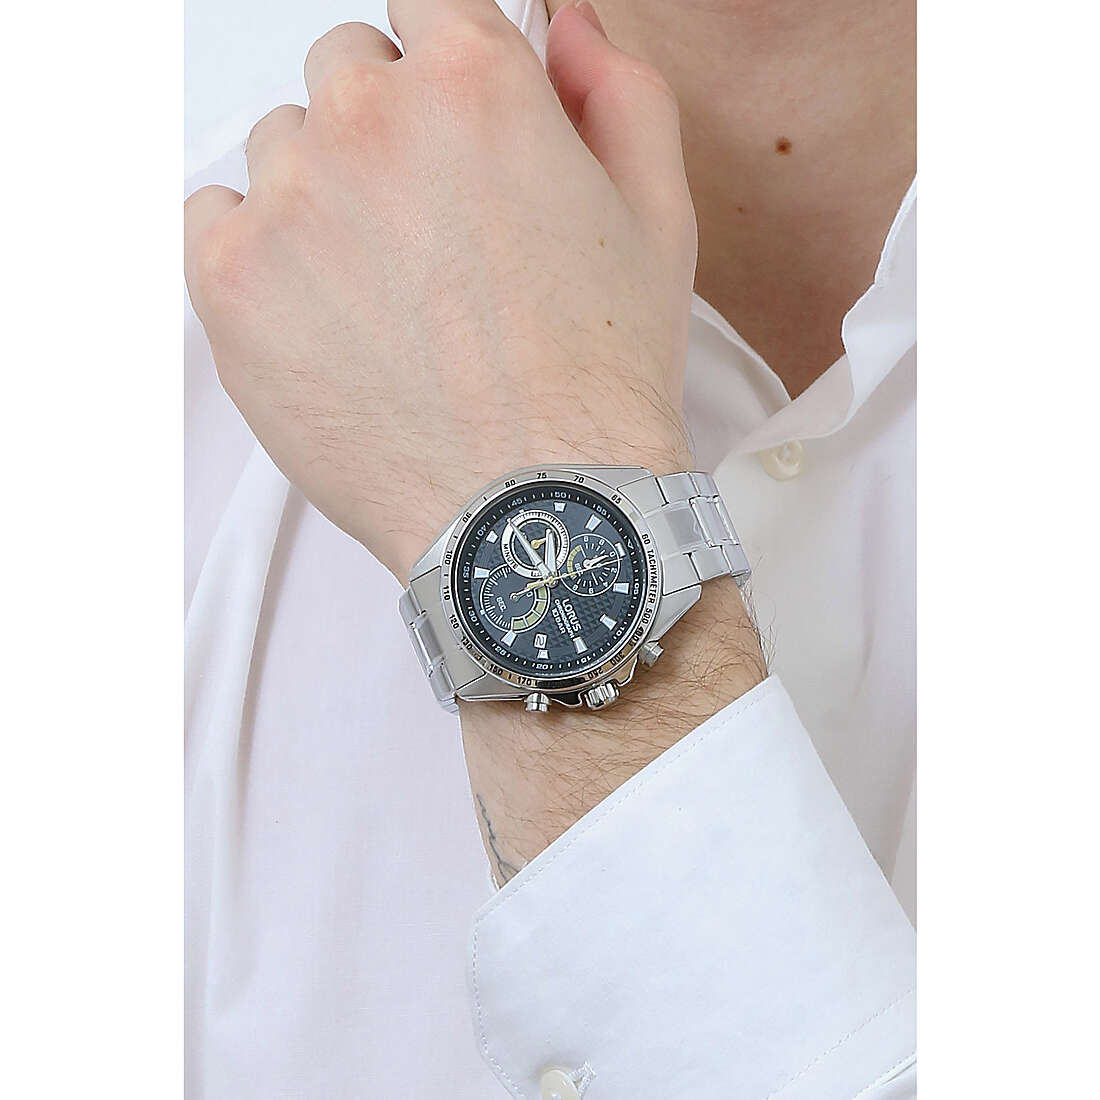 mod. Watches RM351HX9 dial watches GioiaPura | Sports Steel chronographs Black man